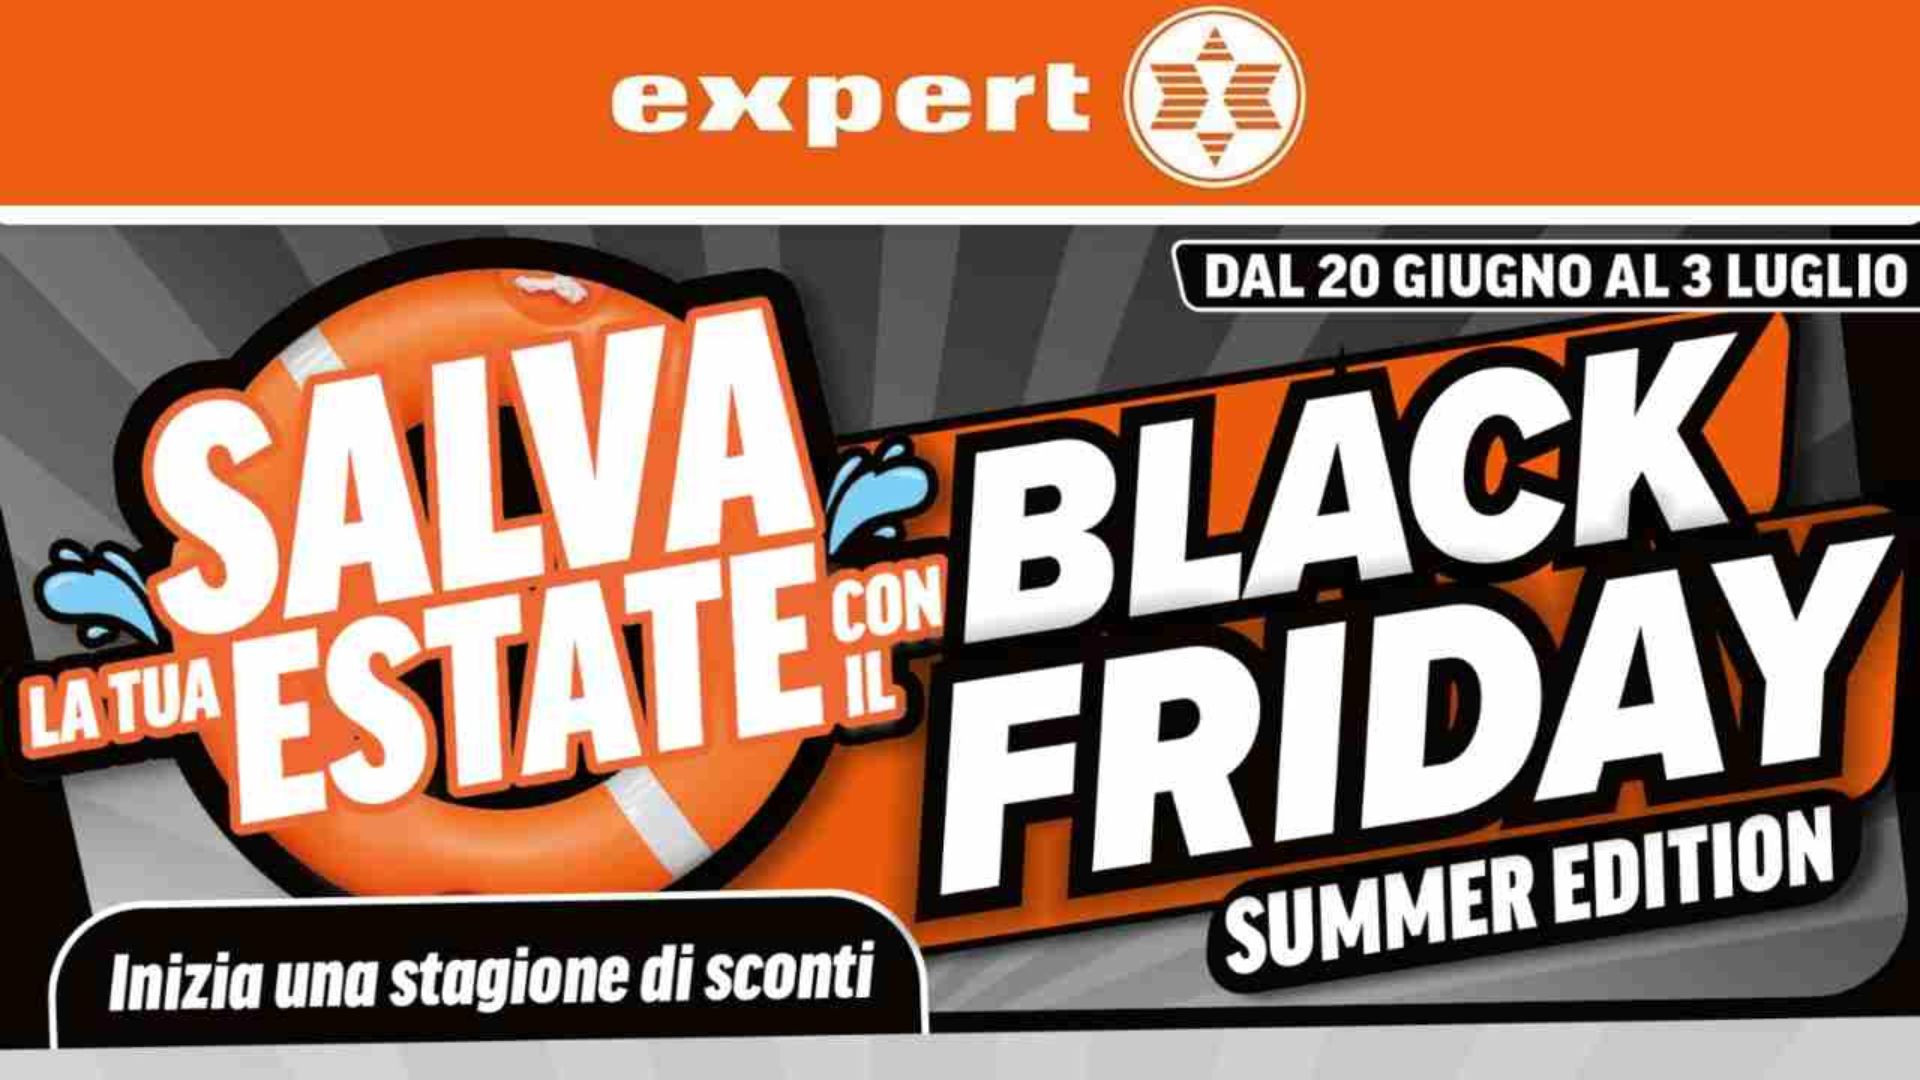 Volantino Expert Black Friday Summer Edition offerte smartphone TV pc Tablet